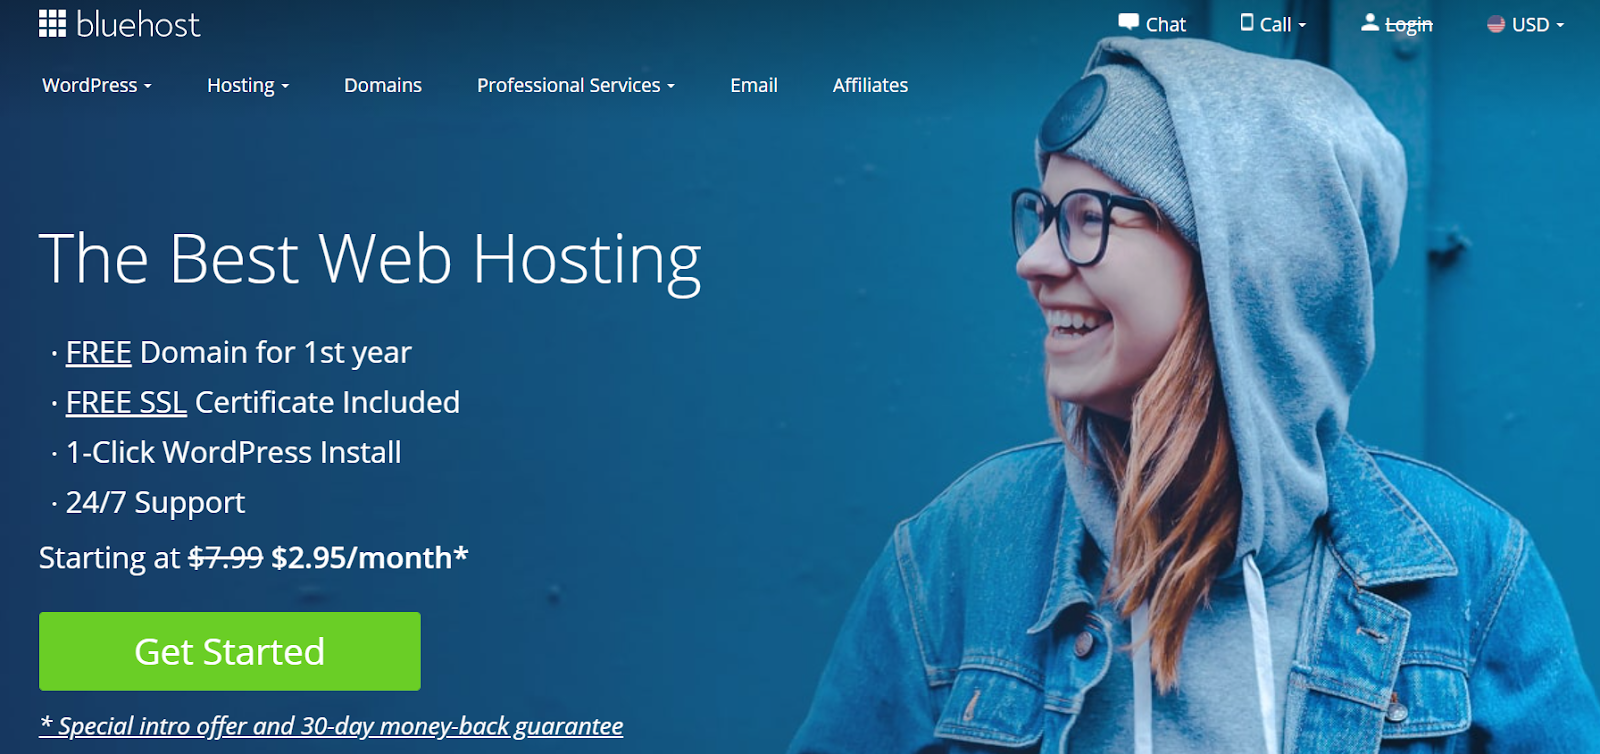 Bluehost hosting service